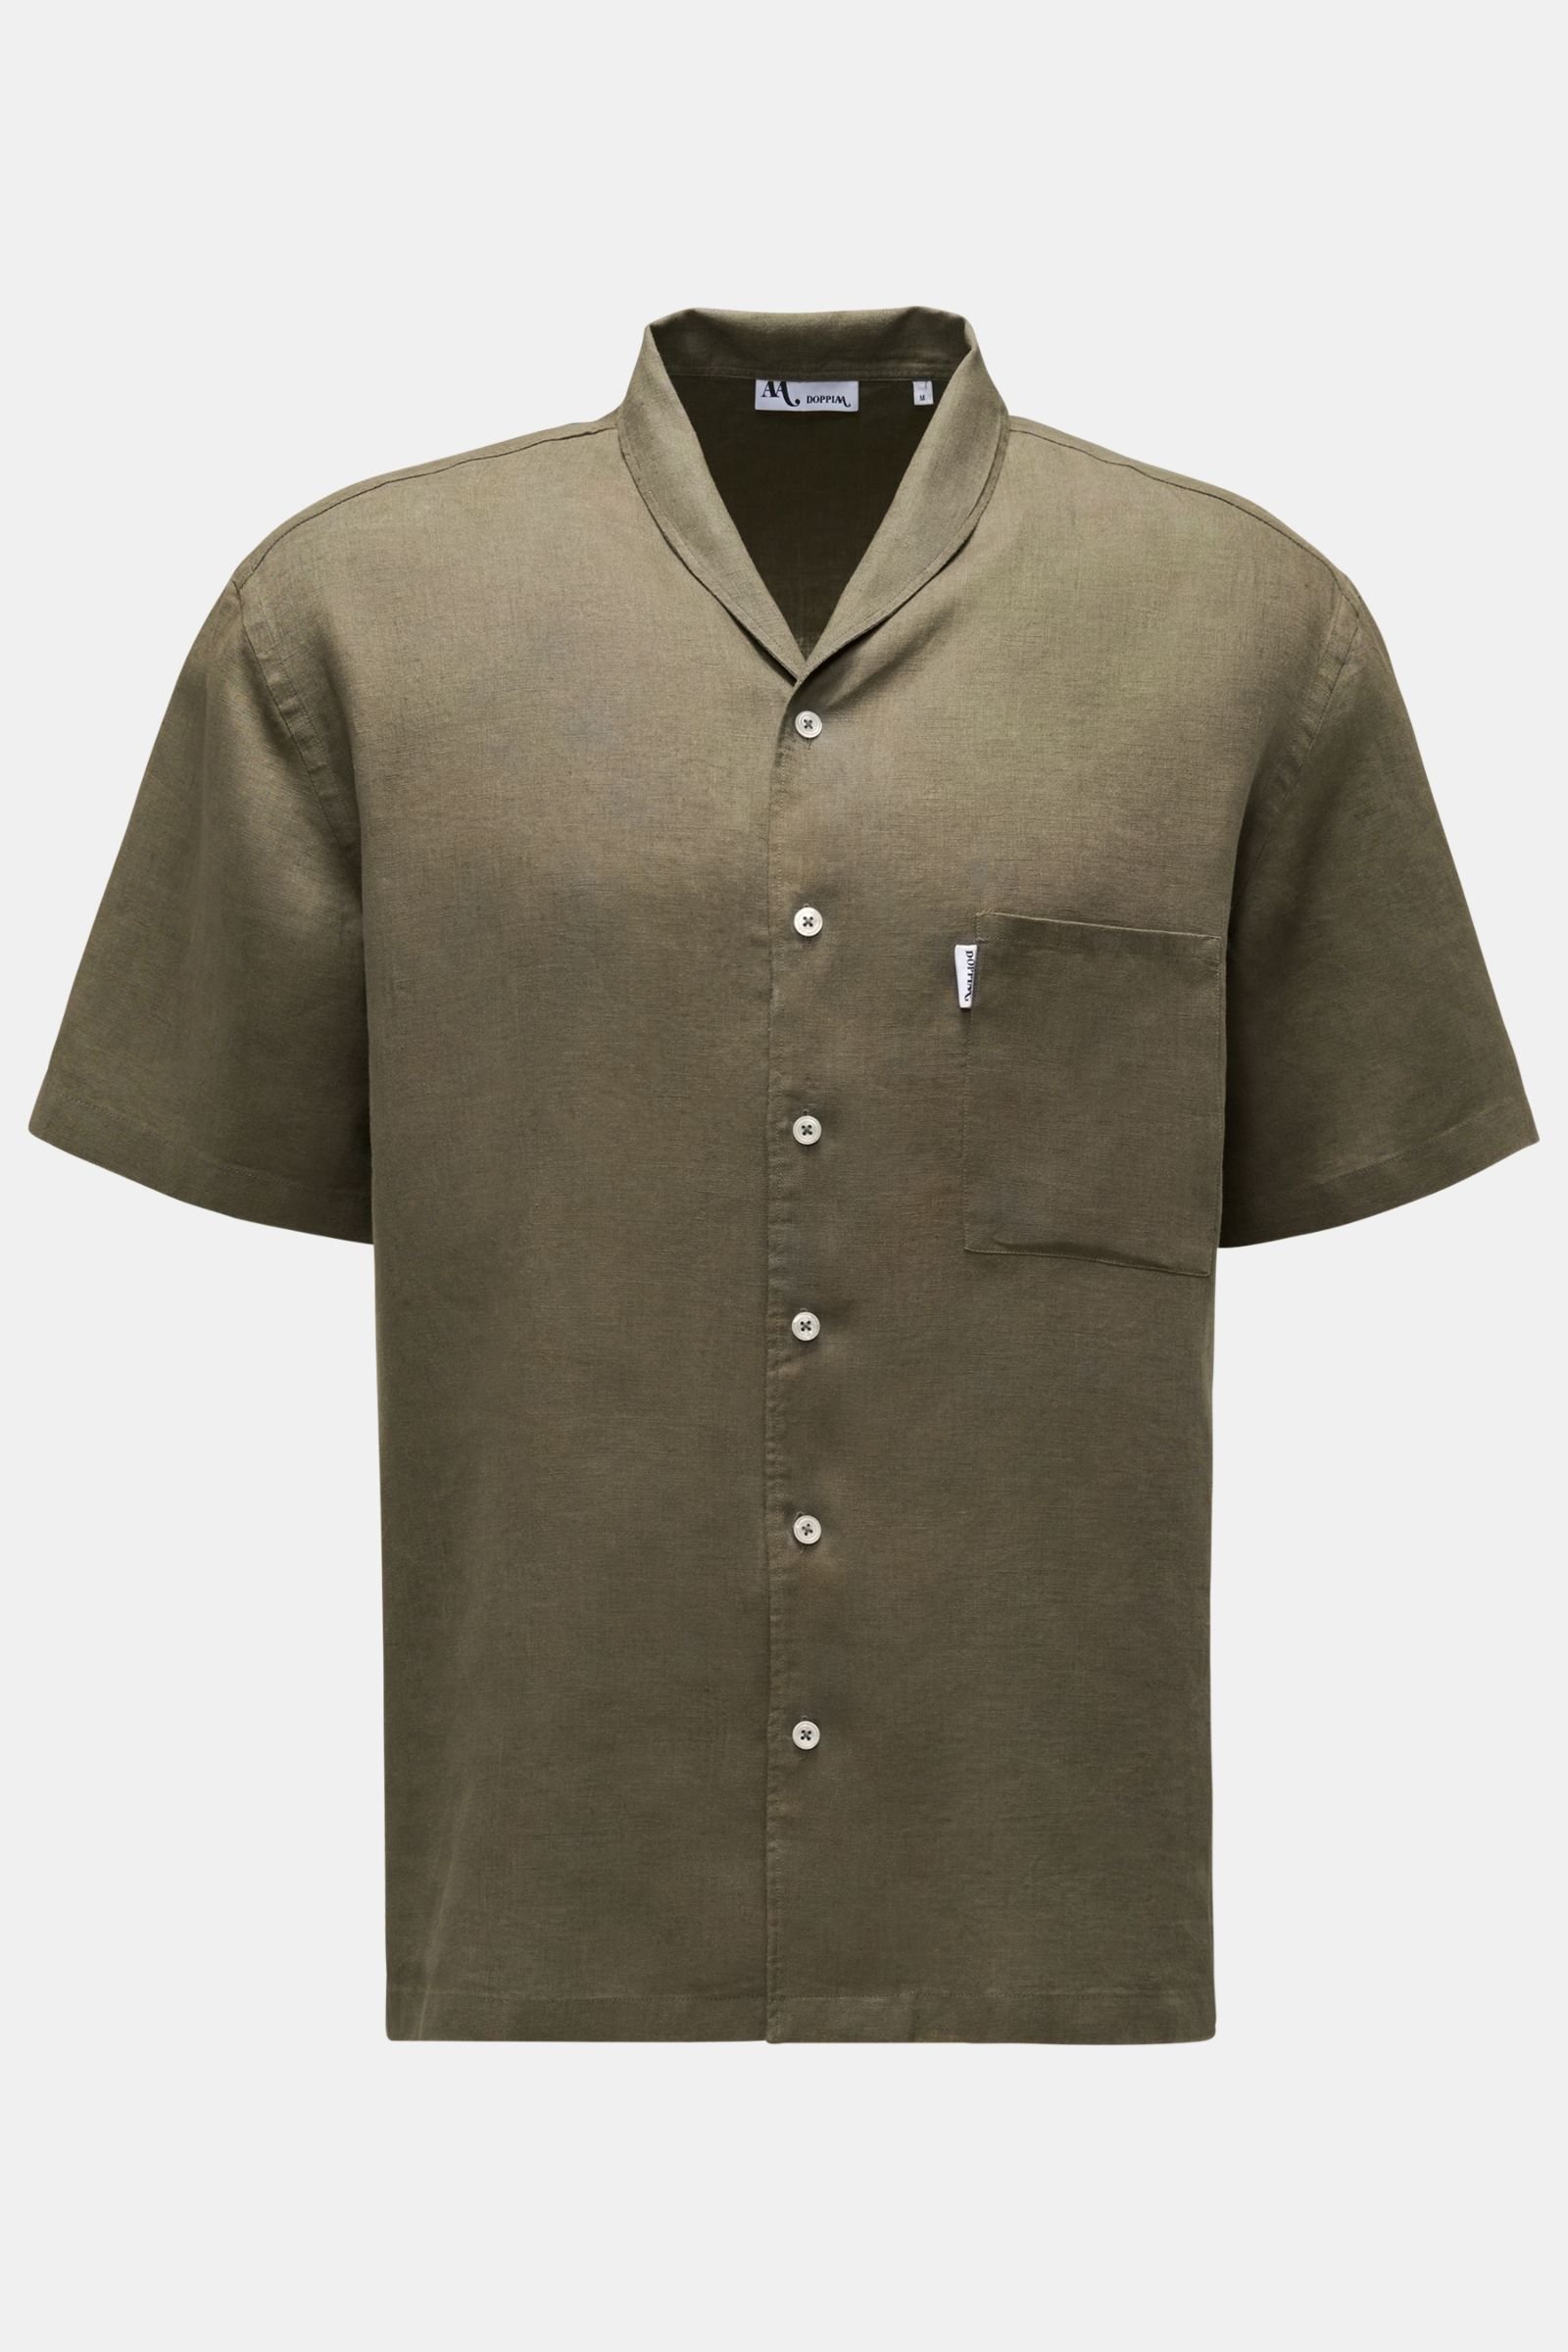 Linen short sleeve shirt 'Aarpino' shawl collar olive